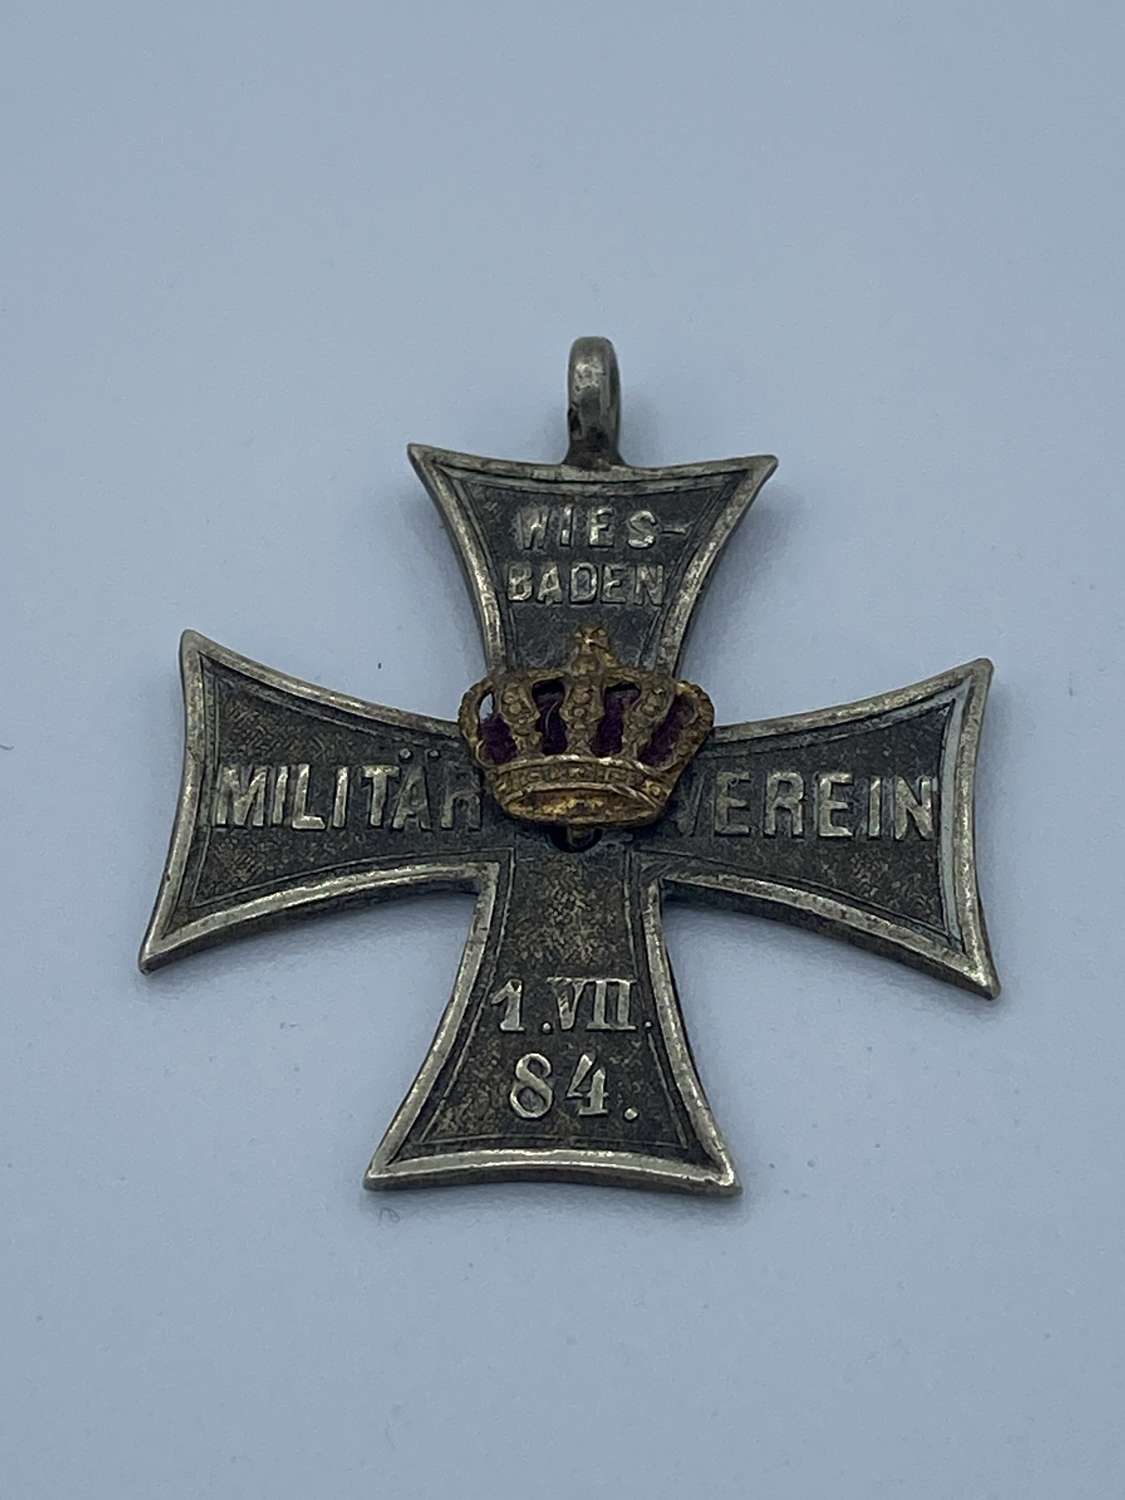 Rare Pre WW1 Wiesbaden Militar Verein 1 VII 84 Medal